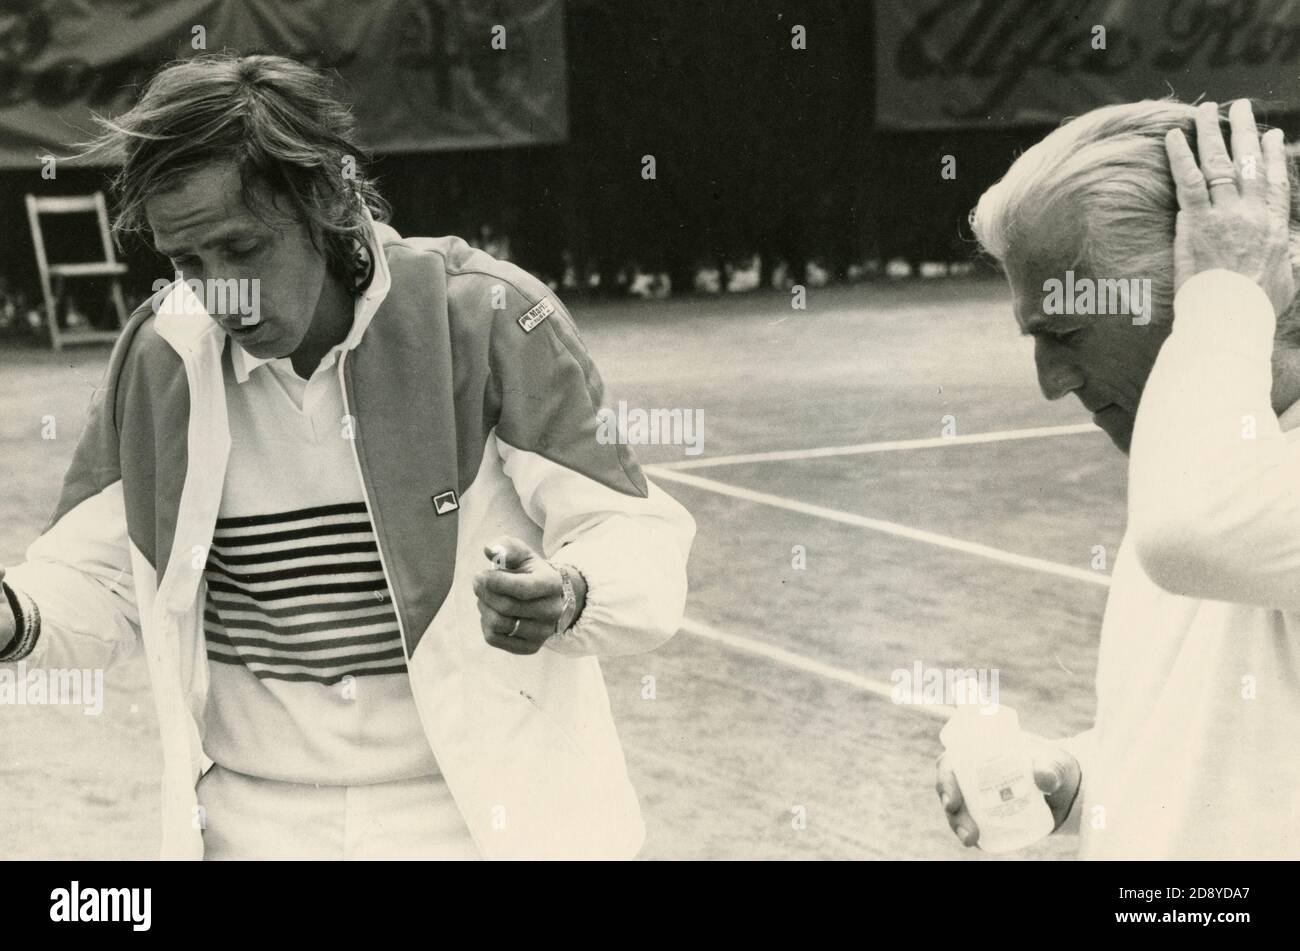 Italian tennis player Corrado Barazzutti, Italy 1980s Stock Photo